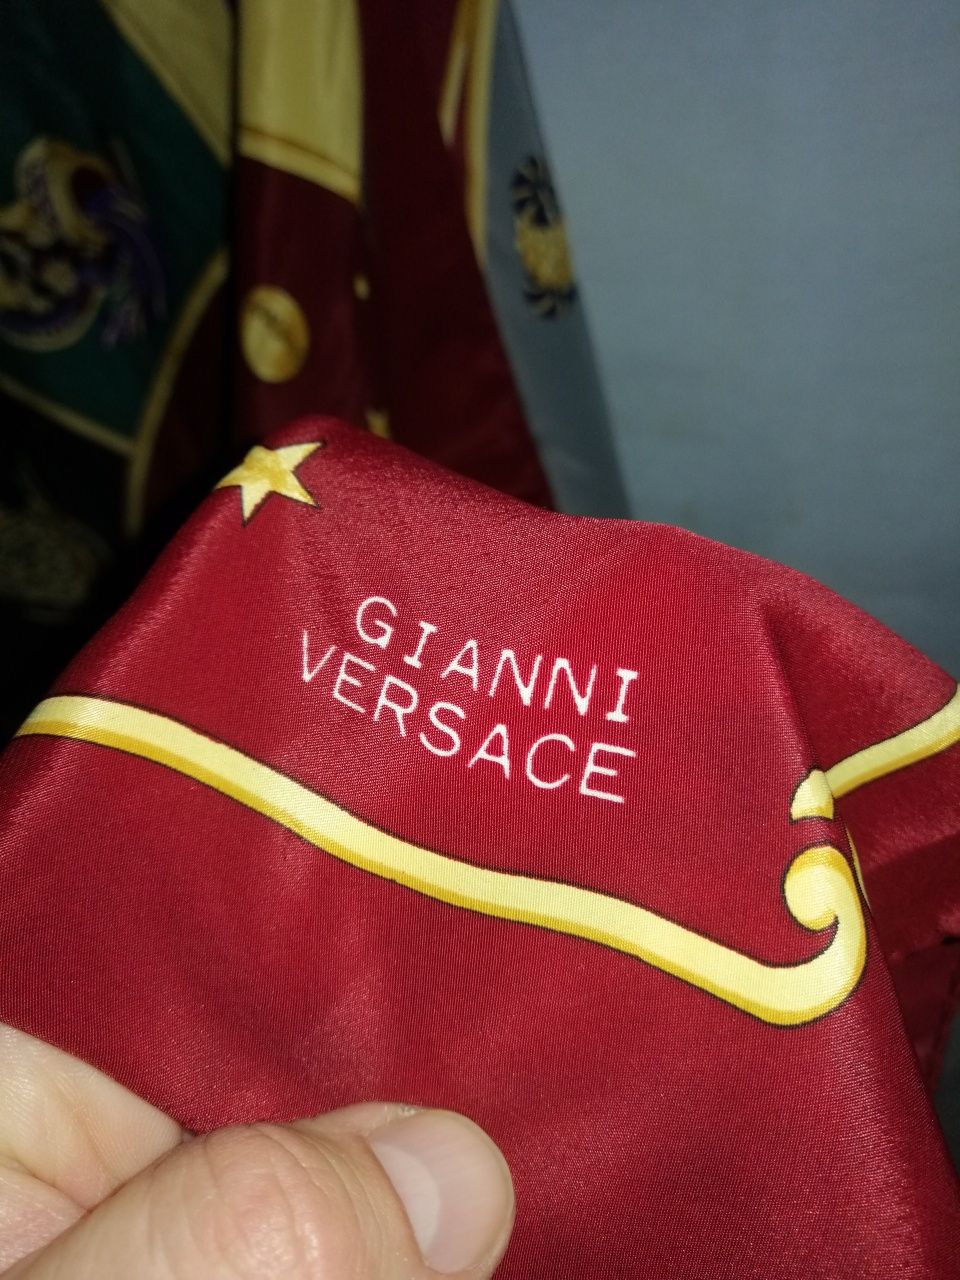 Gianni versace eșarfă din mătase naturala zodiac